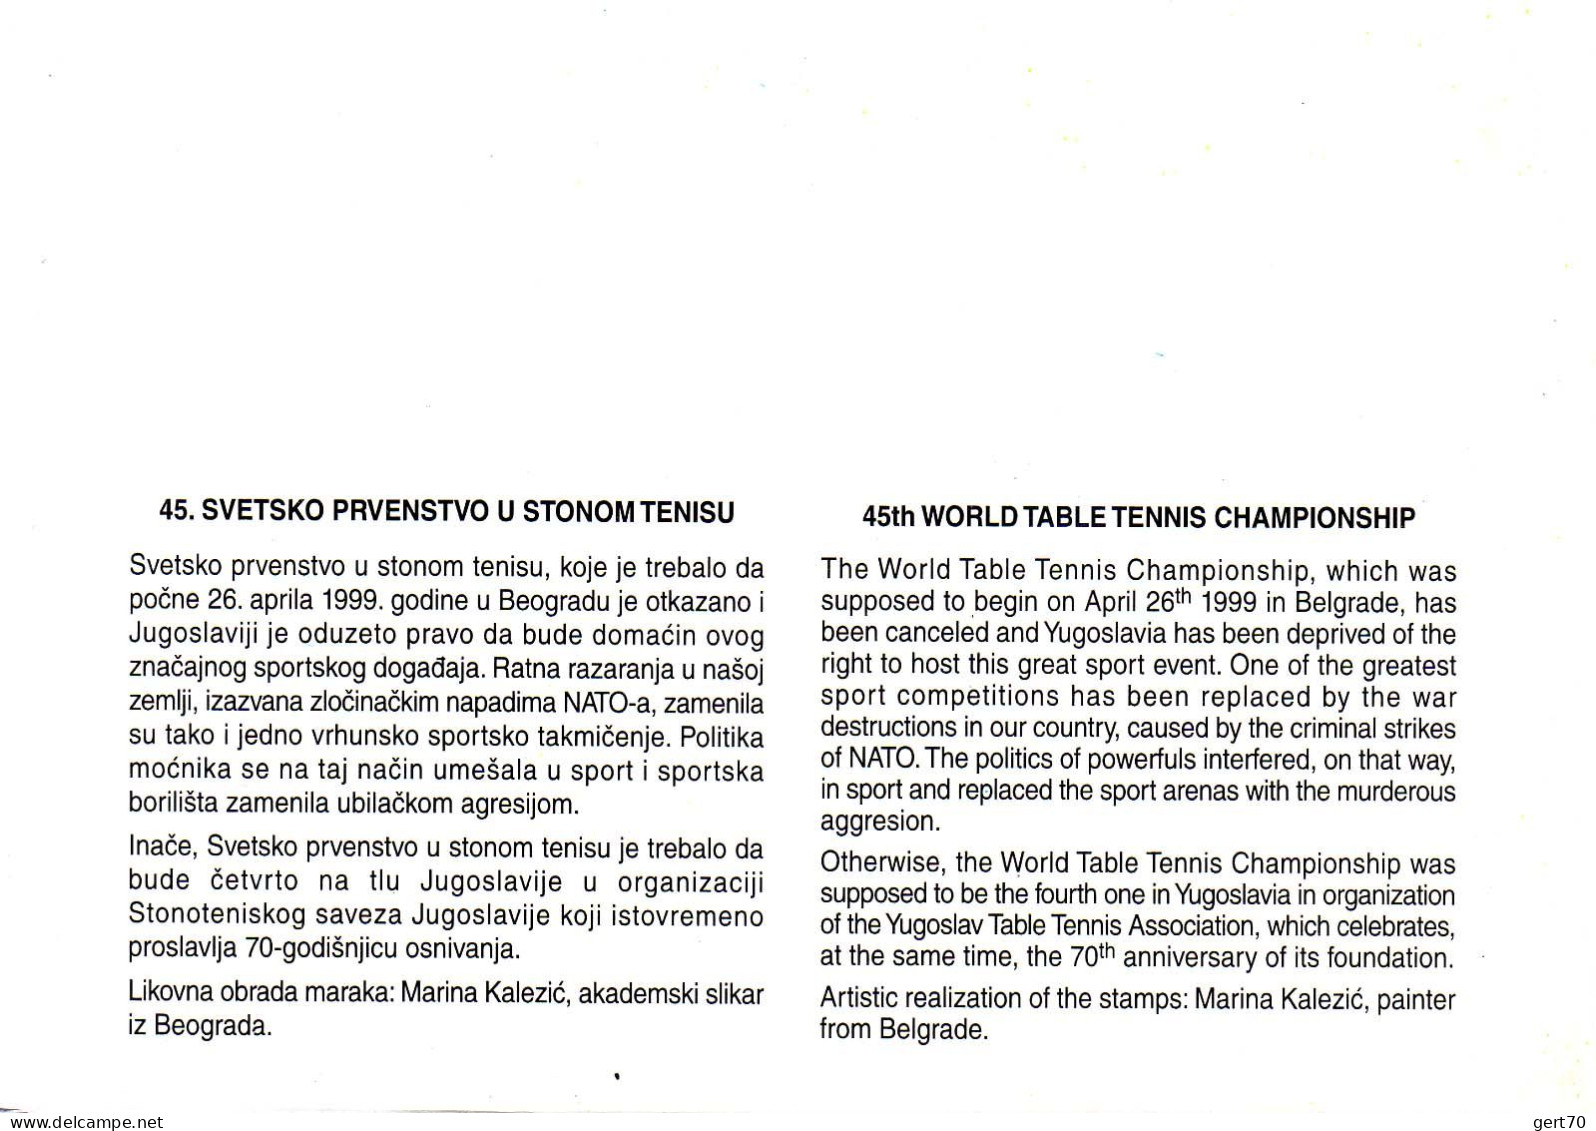 Yugoslavia / Yougoslavie 1999, Mint Cover / Enveloppe Vierge / Canceled 45th World TT Championships, Belgrade - Tennis De Table